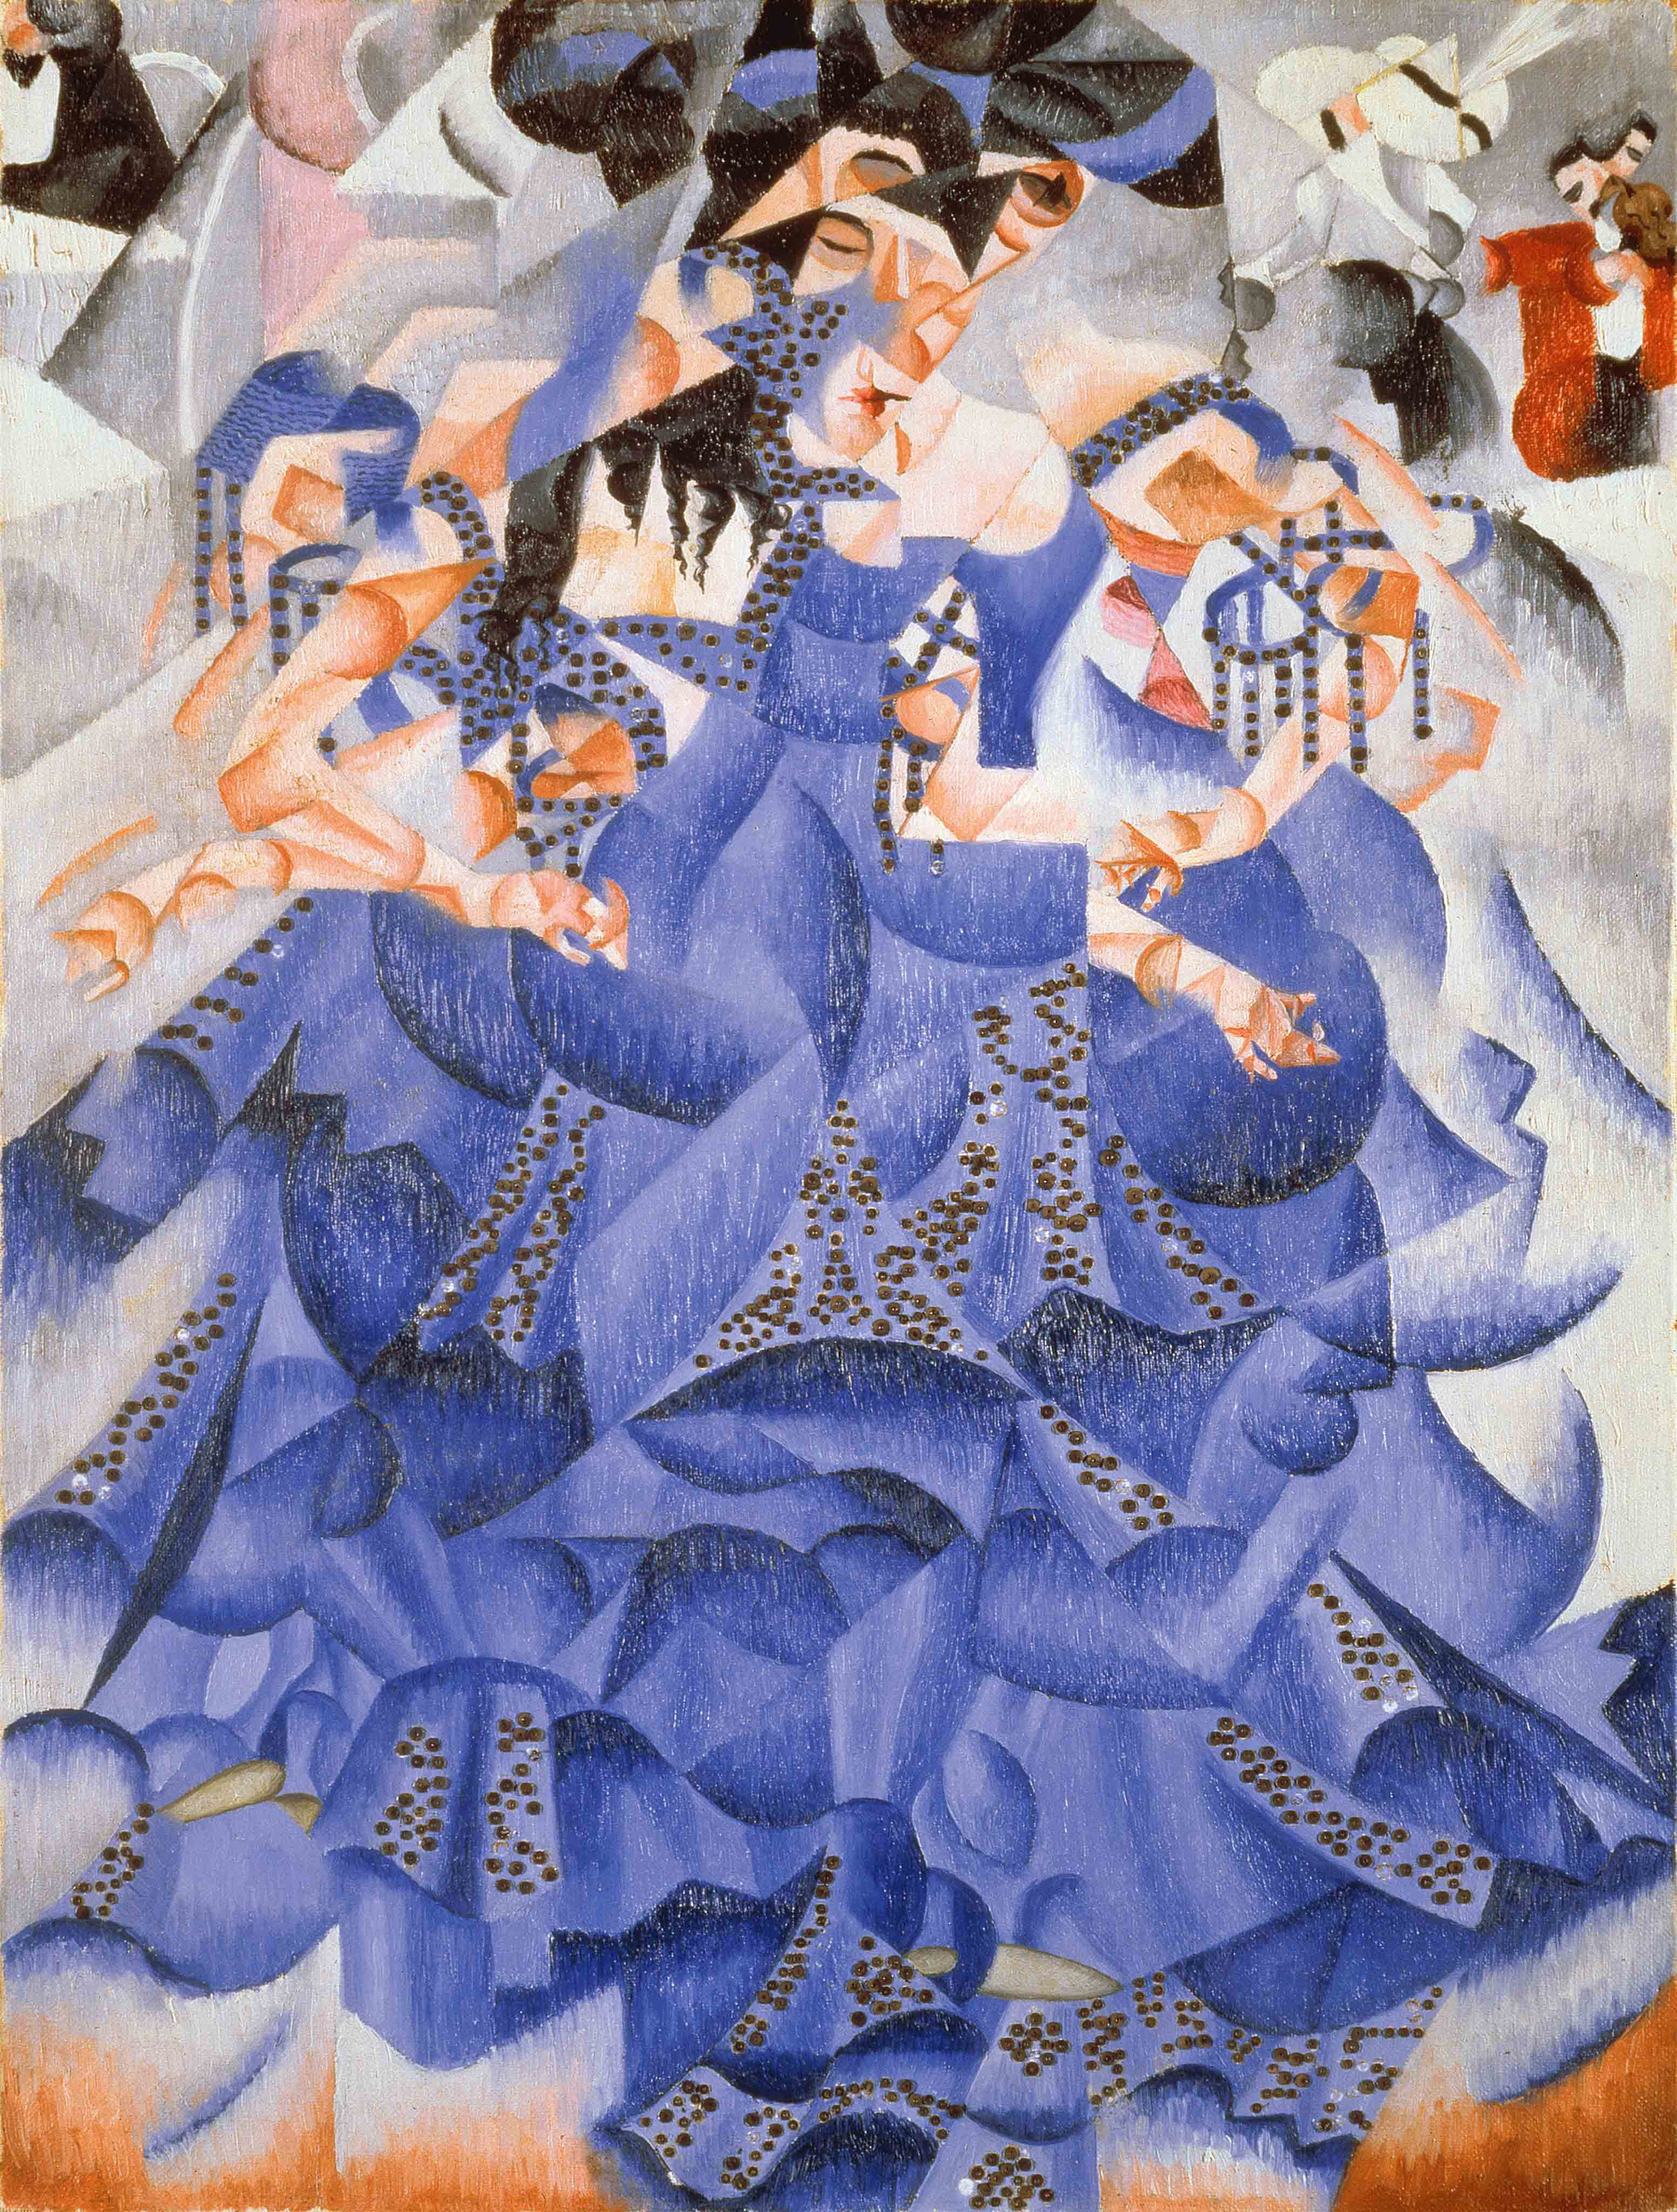 Blue Dancer by Gino Severini Trivium Art History